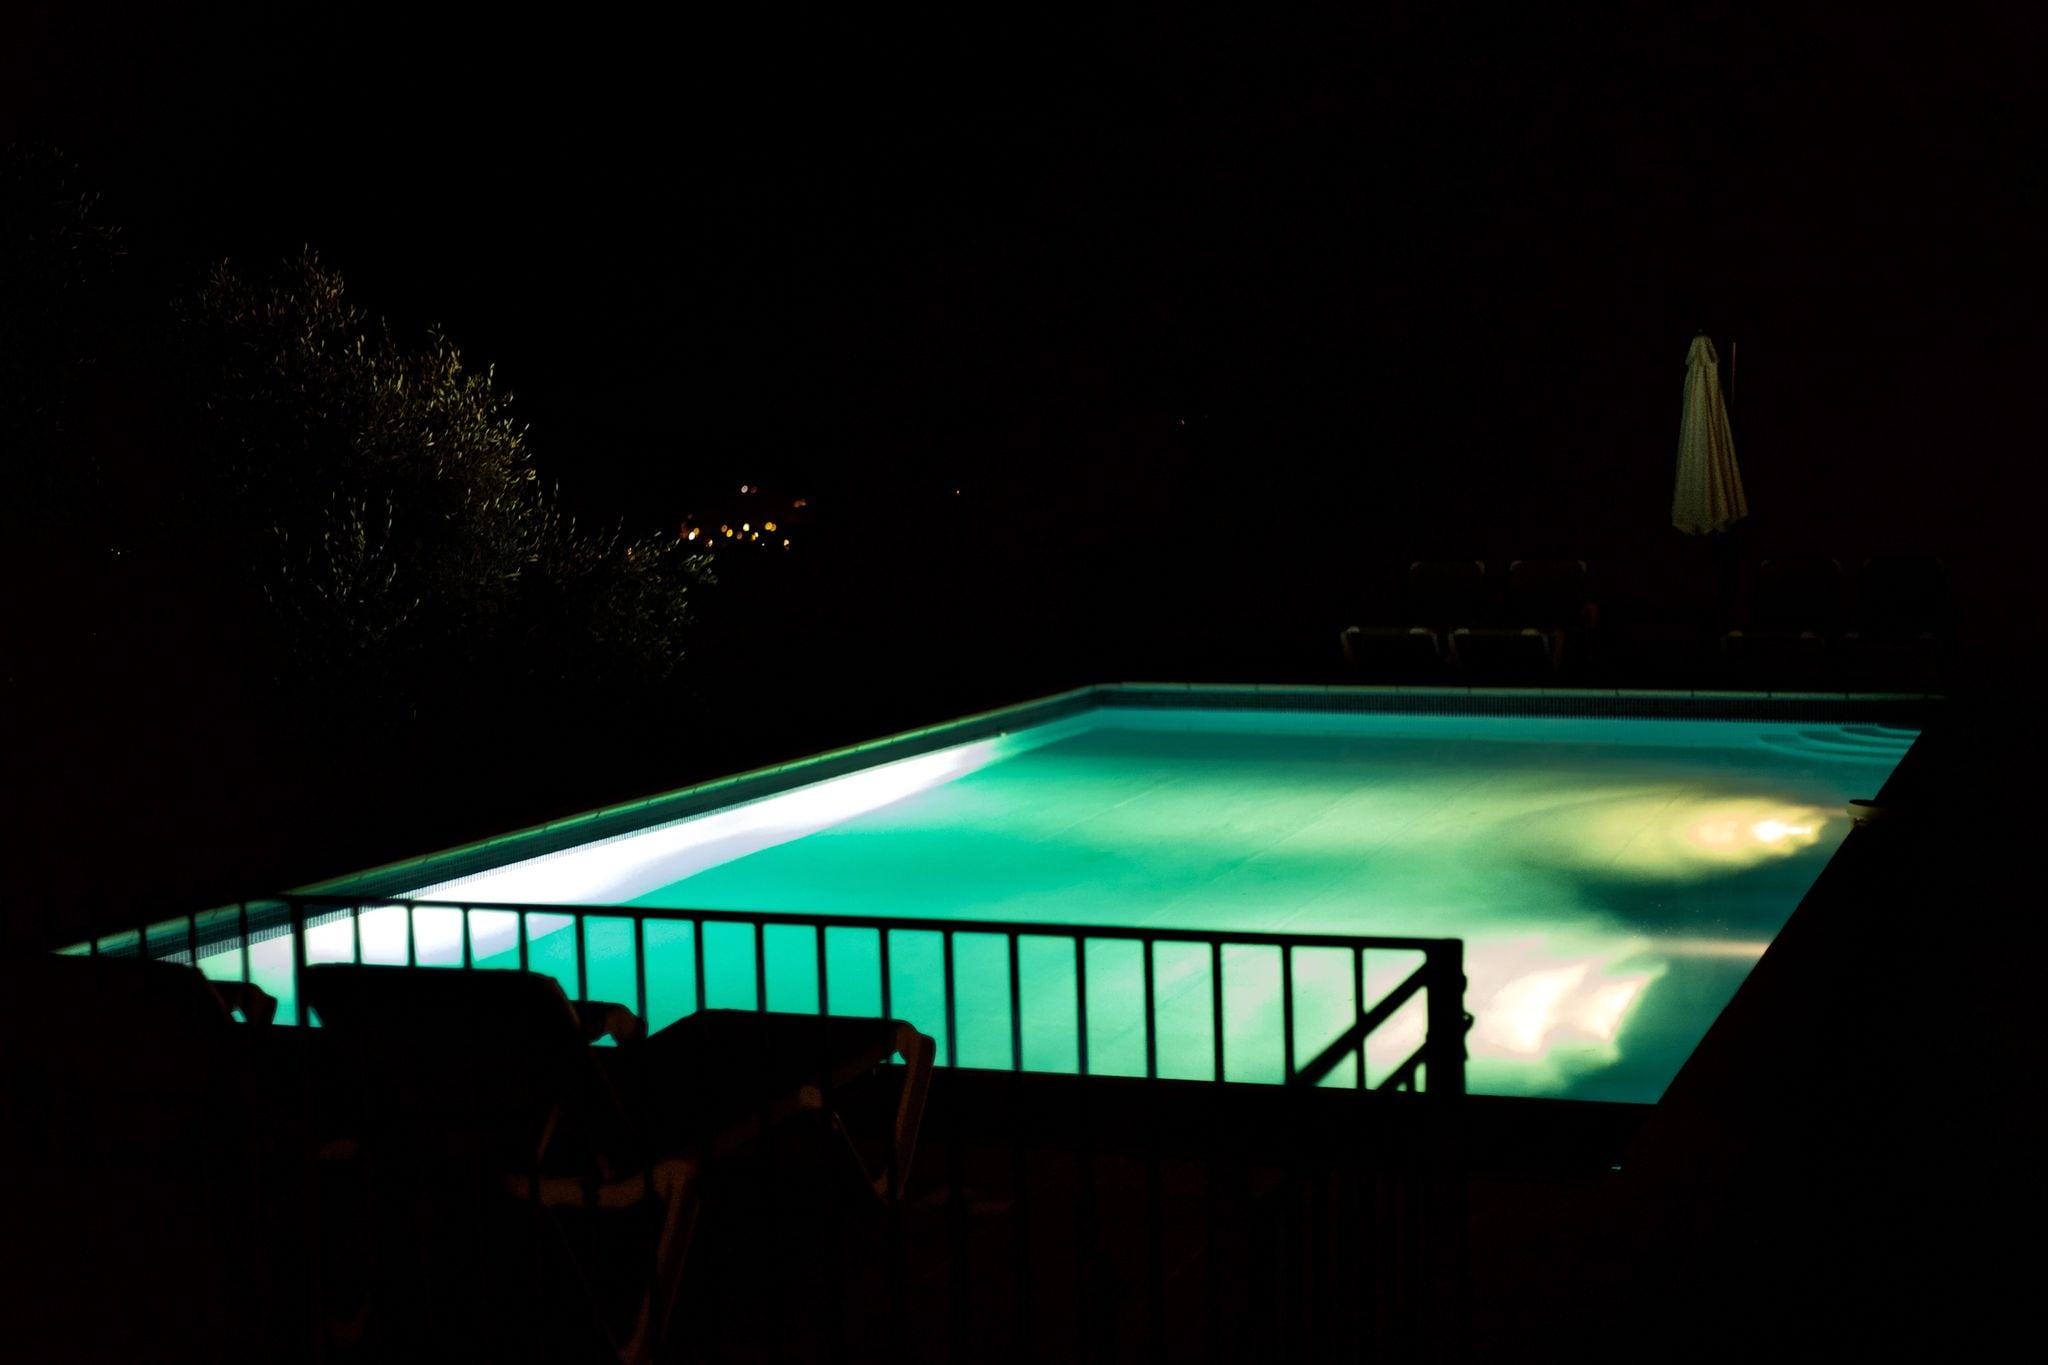 Modern Villa with Private Pool in Cabris